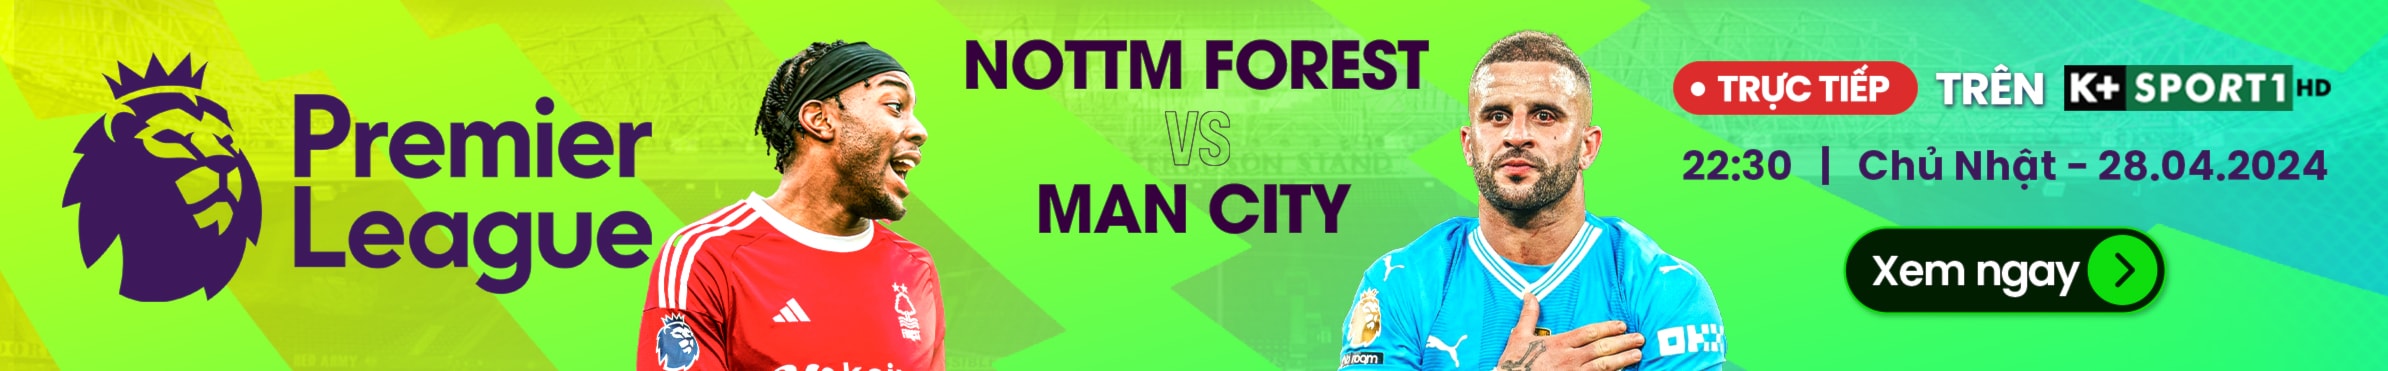 Nottm Forest vs Man City